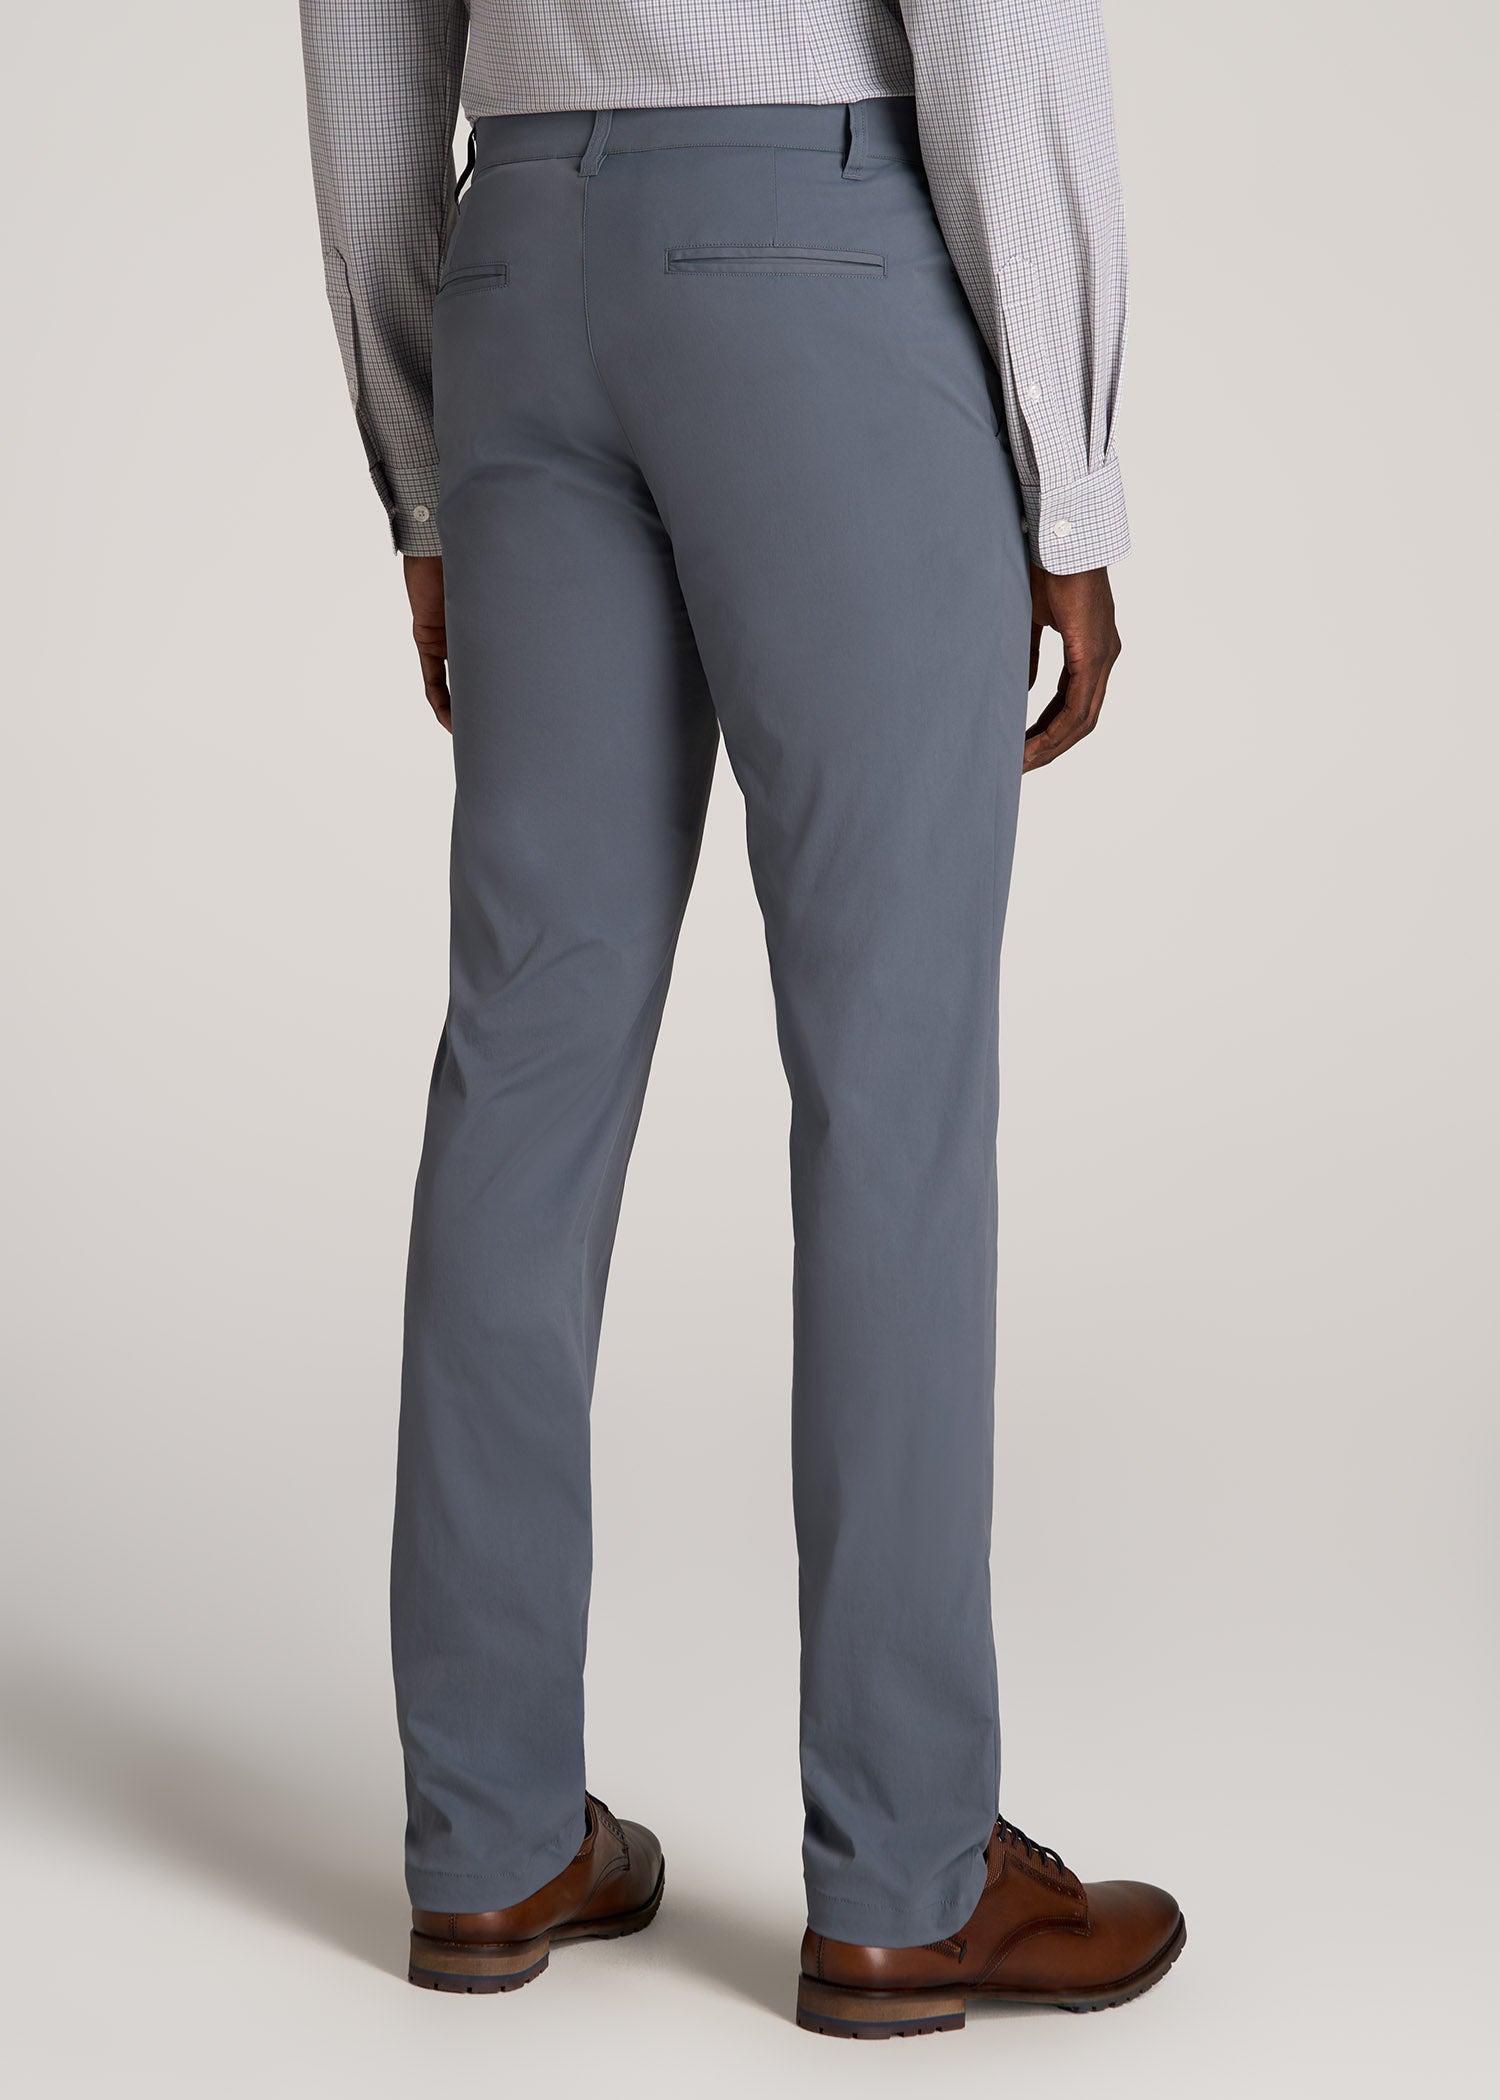 Men's Tall Traveler Chino Pants Charcoal | American Tall